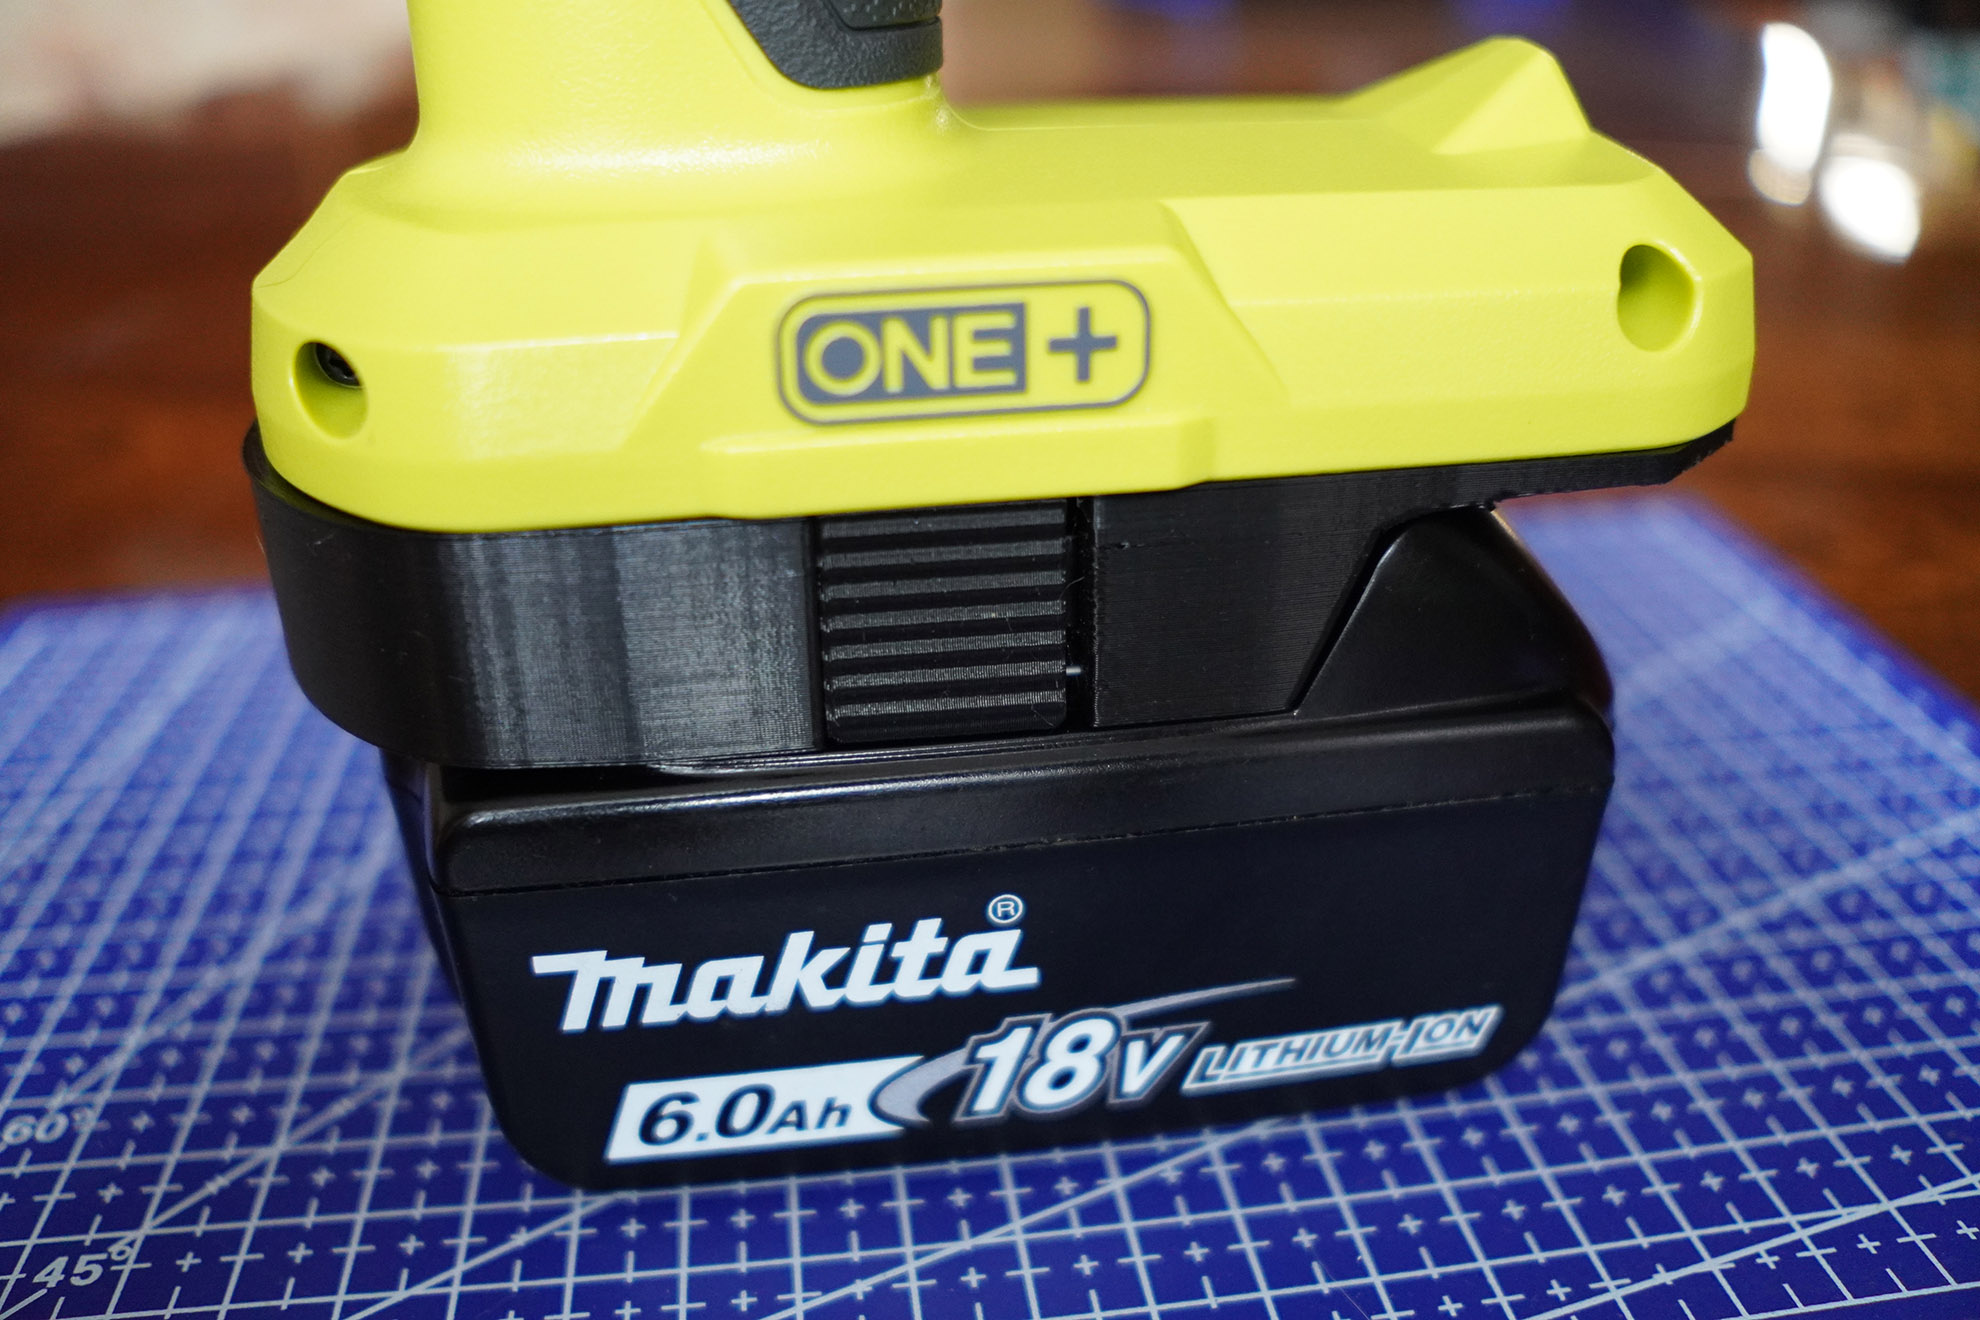 Proper 18V Makita to Ryobi battery adapter